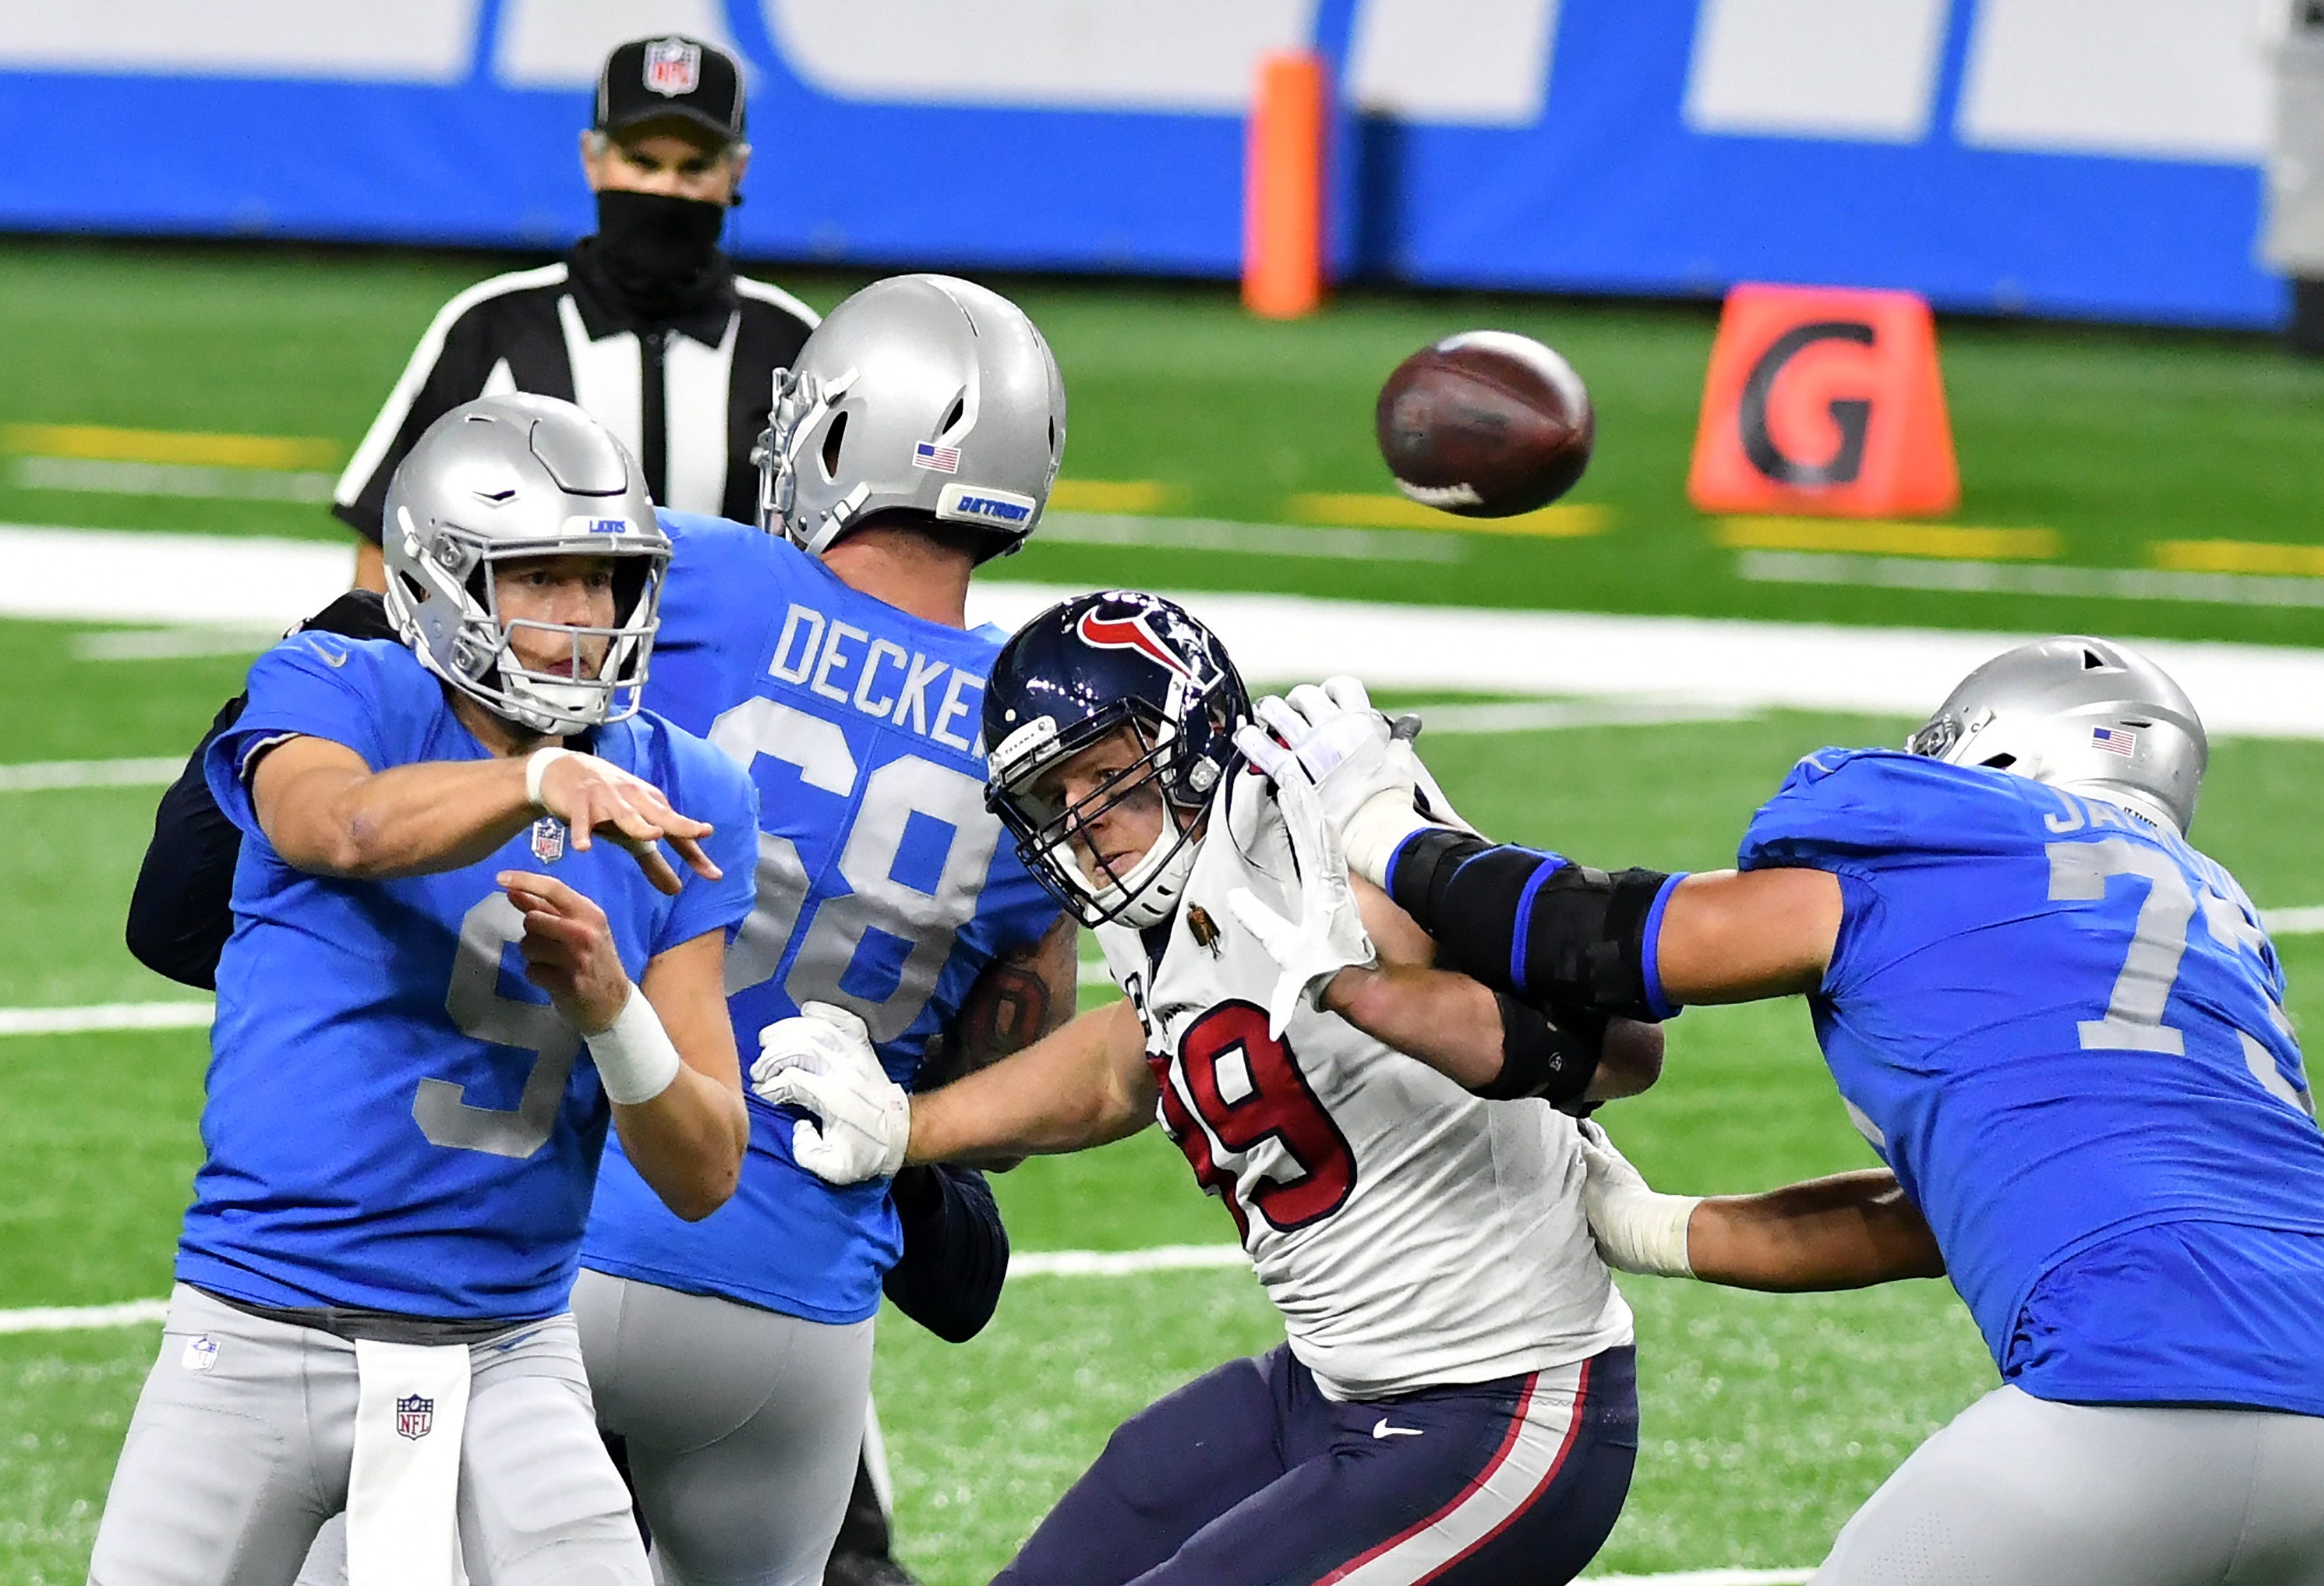 Lions offensive guard Jonah Jackson (73) blocks Texans defensive end J.J. Watt (99) while Lions quarterback Matthew Stafford (9) passes in the fourth quarter.